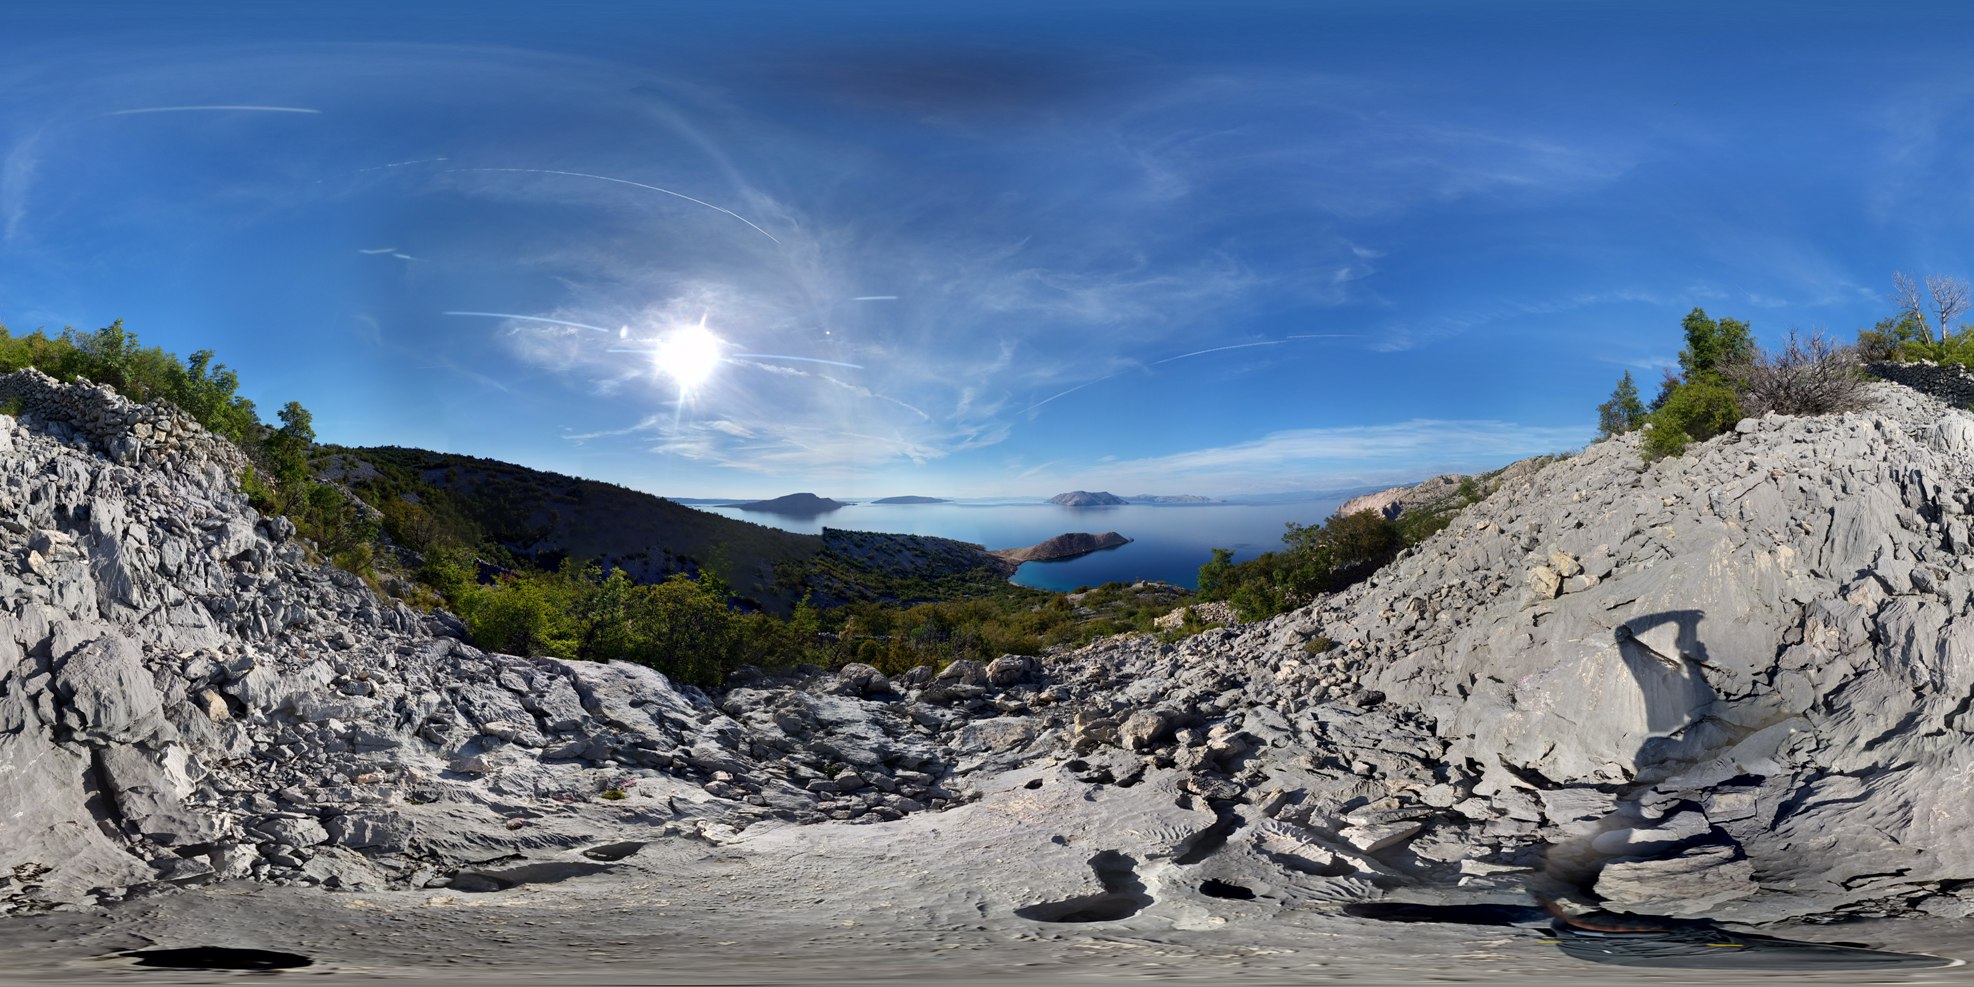 Samsung Galaxy S5 surround shot example, Lukovo coast in Croatia 2